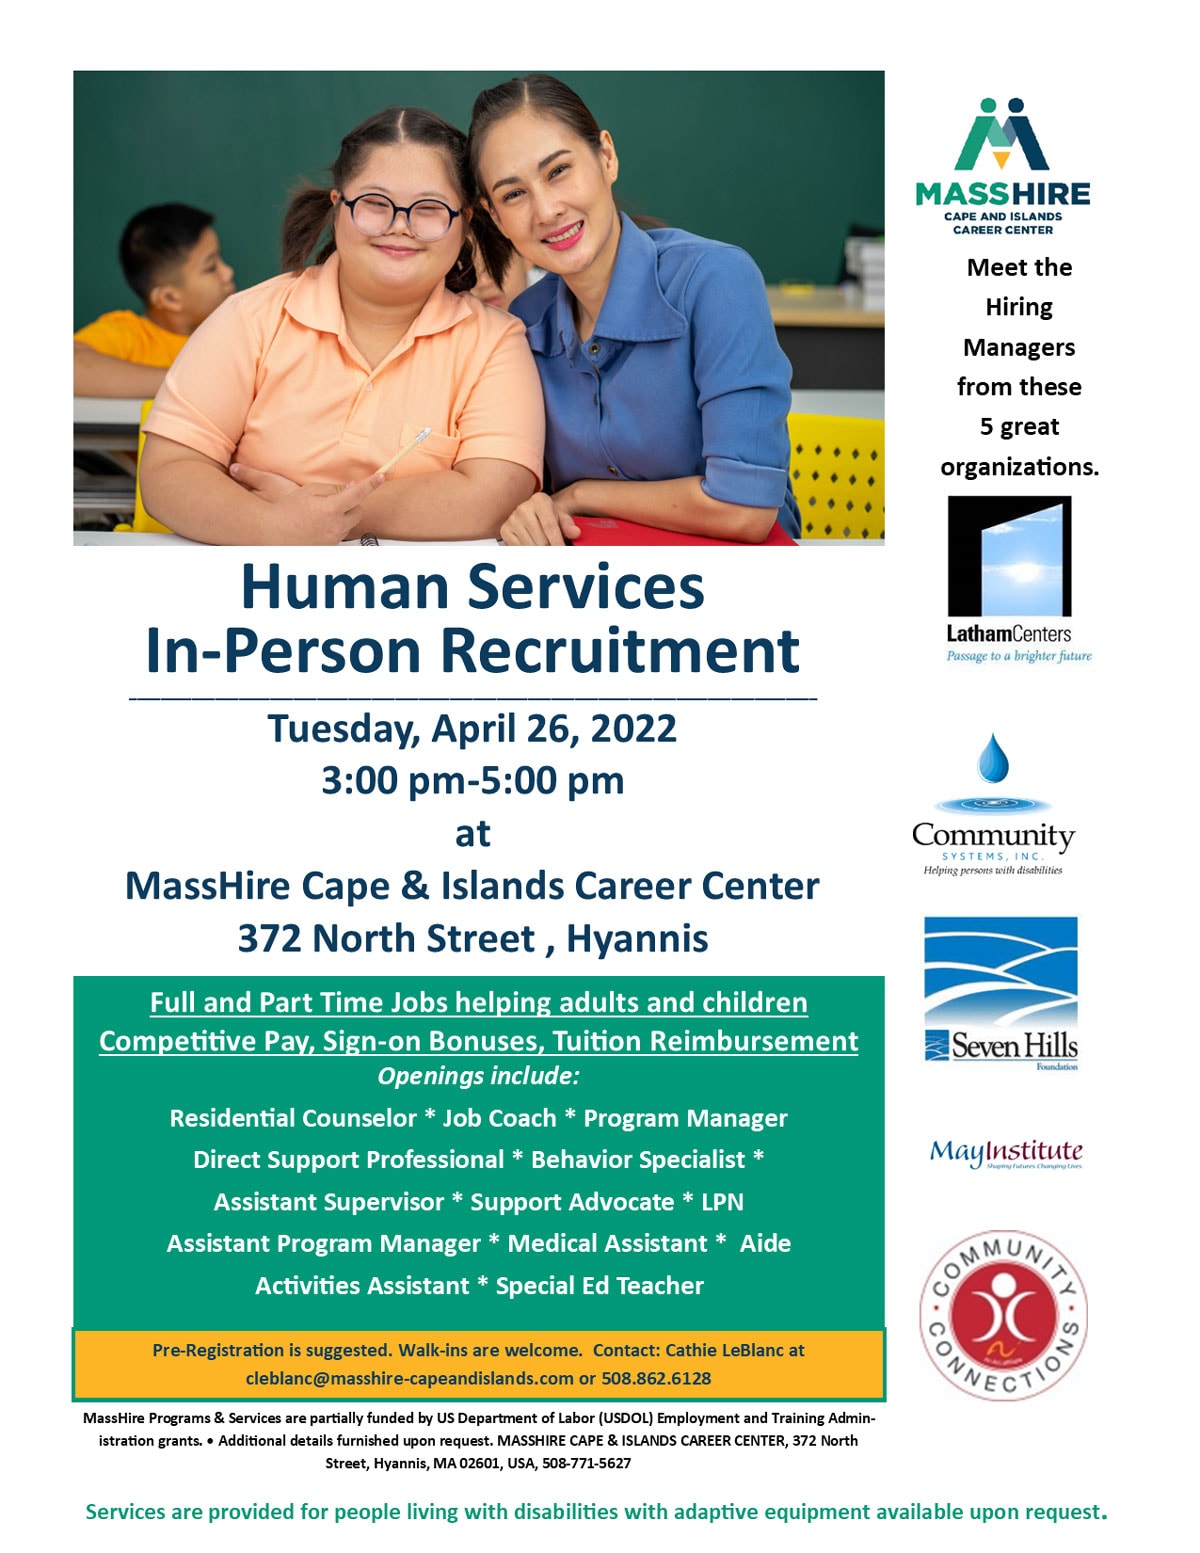 Human Services Recruitment 4-26-22